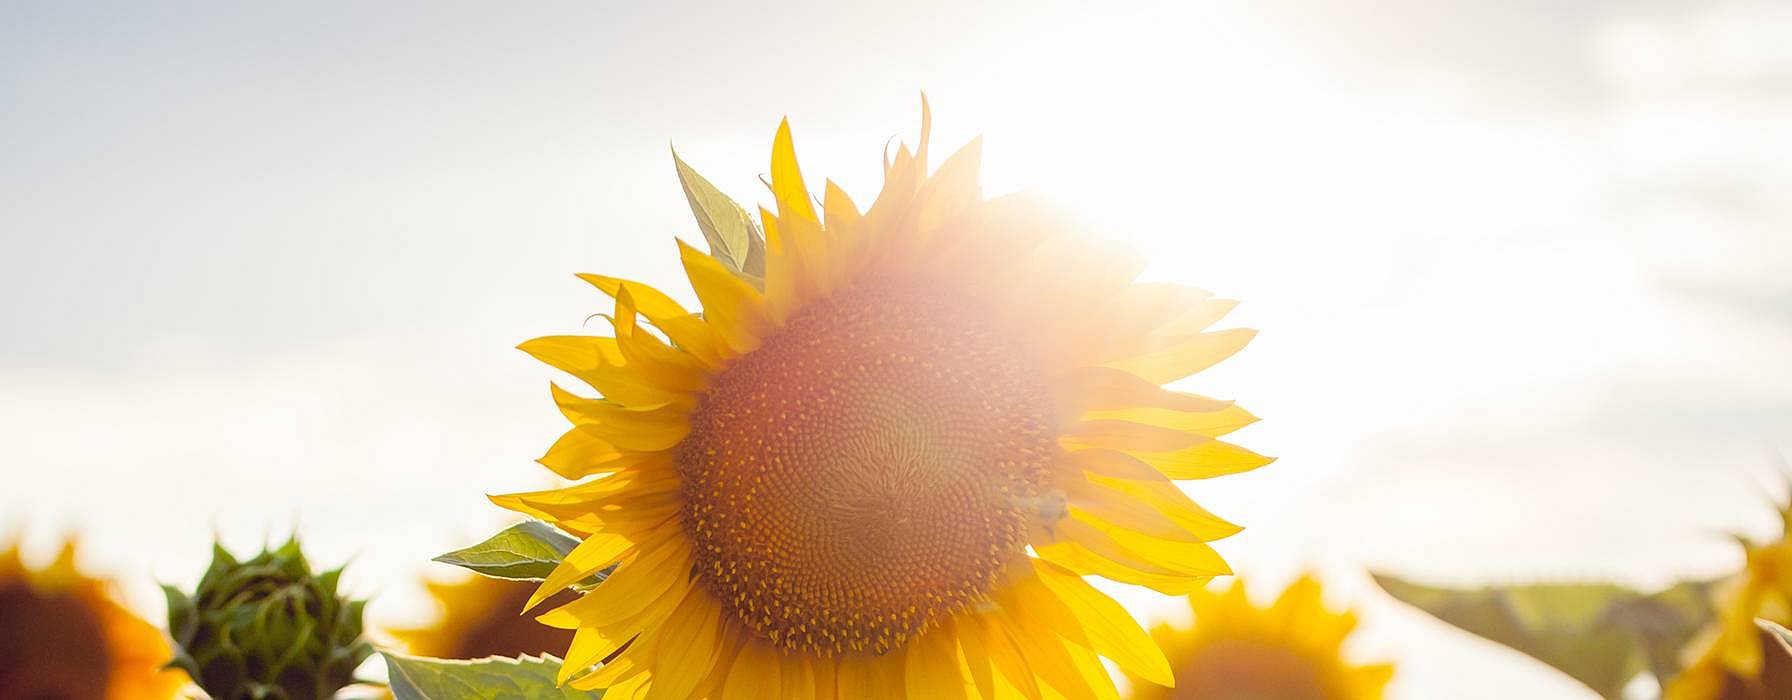 hd_sunflower_sky